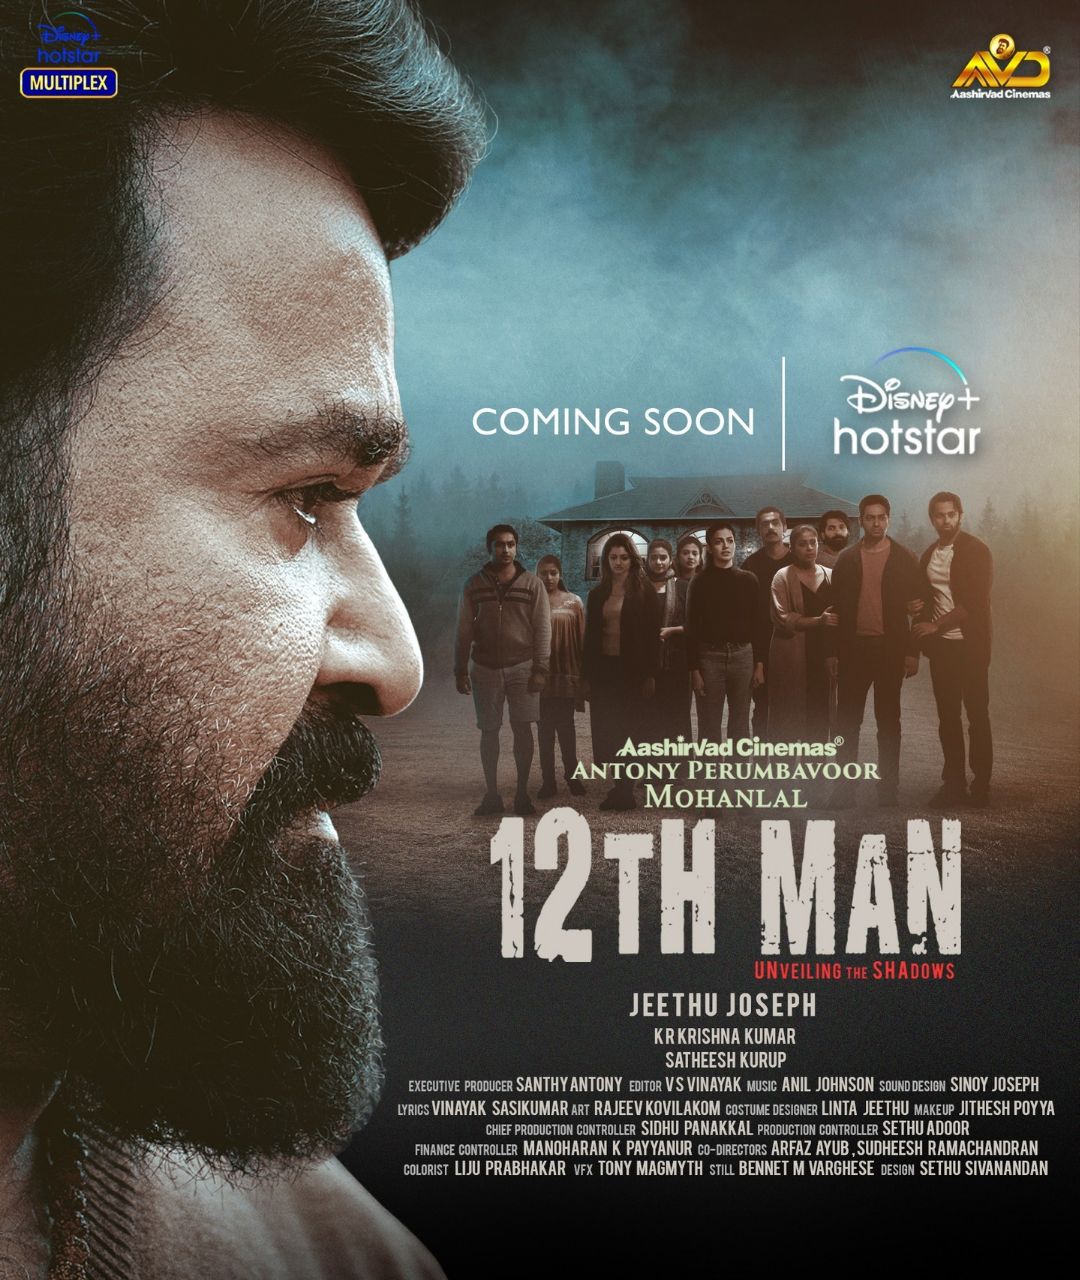 12th Man Malayalam Movie download filmymeet,khatrimaza,123mkv,9xmovies, jalshamoviezhd,katmoviehd,hdmoviesh, movierulz,7starhd,coolmoviez,tamilrockers, moviescounter,skymovies,moviezaddiction